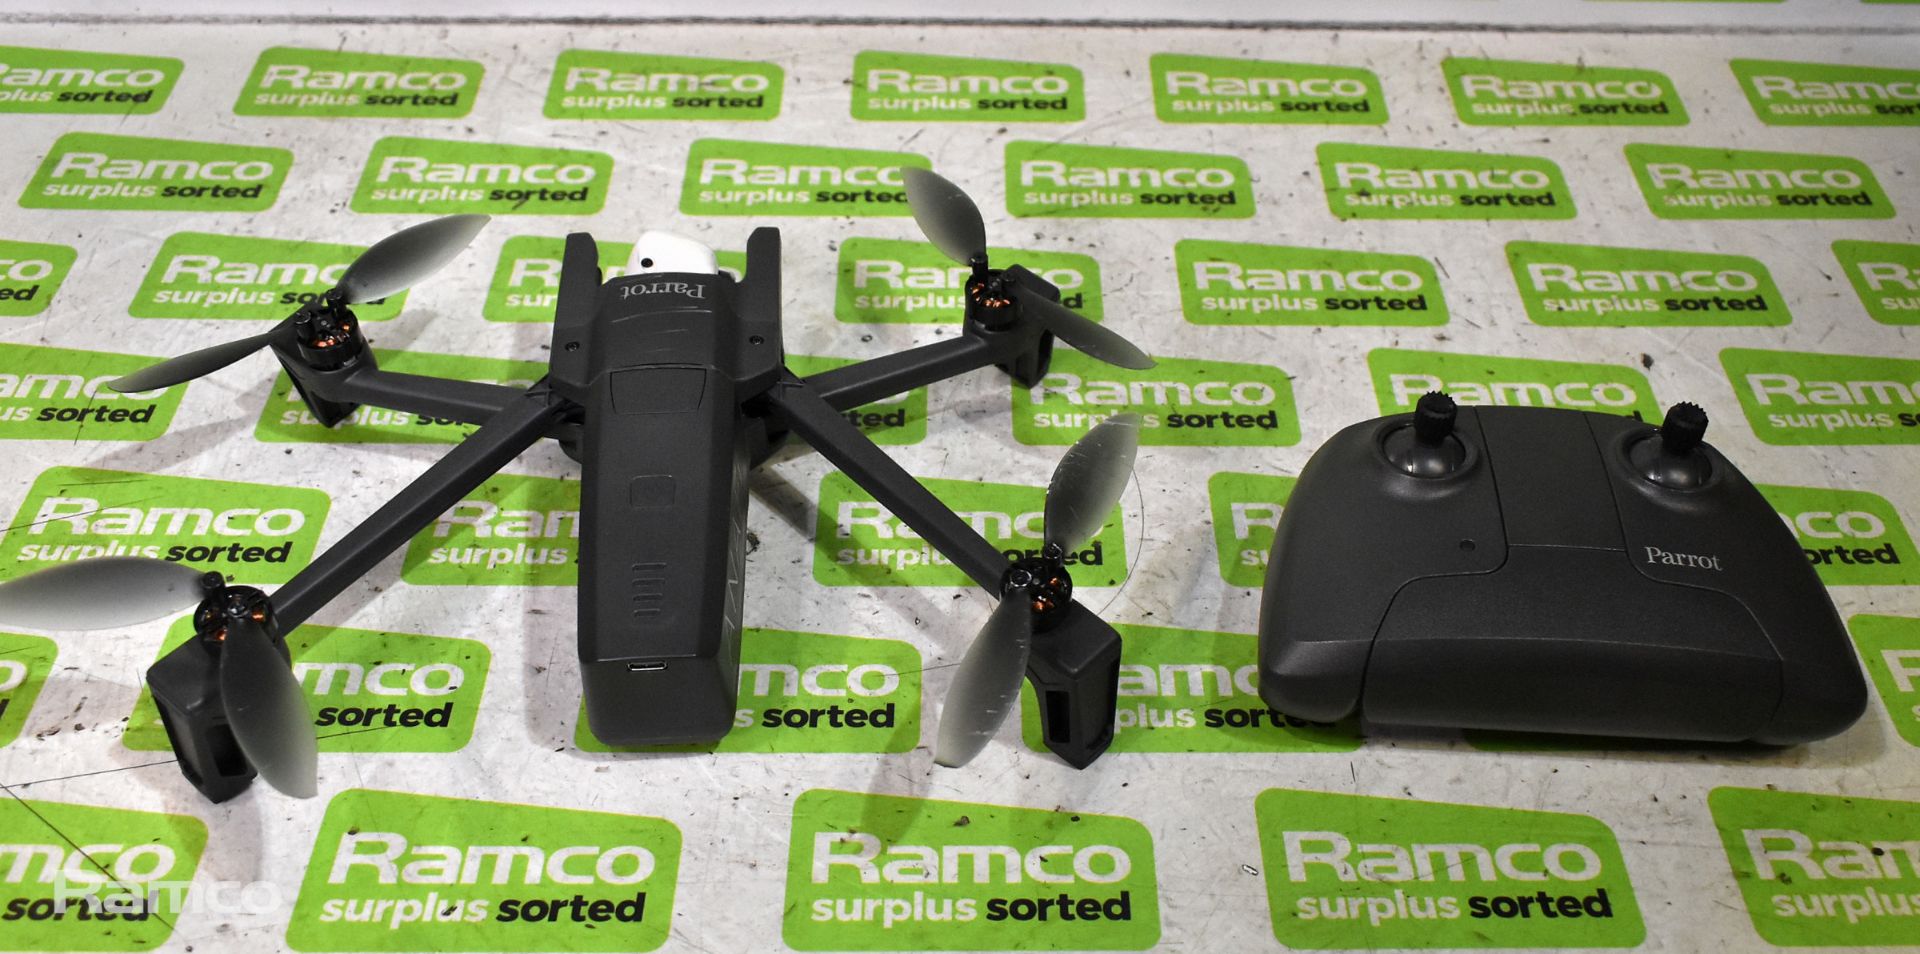 Parrot ANAFI ultra compact 4K HDR camera drone - Parrot SkyController 3 handset - 4x 2700mAh 7.6V - Image 3 of 12